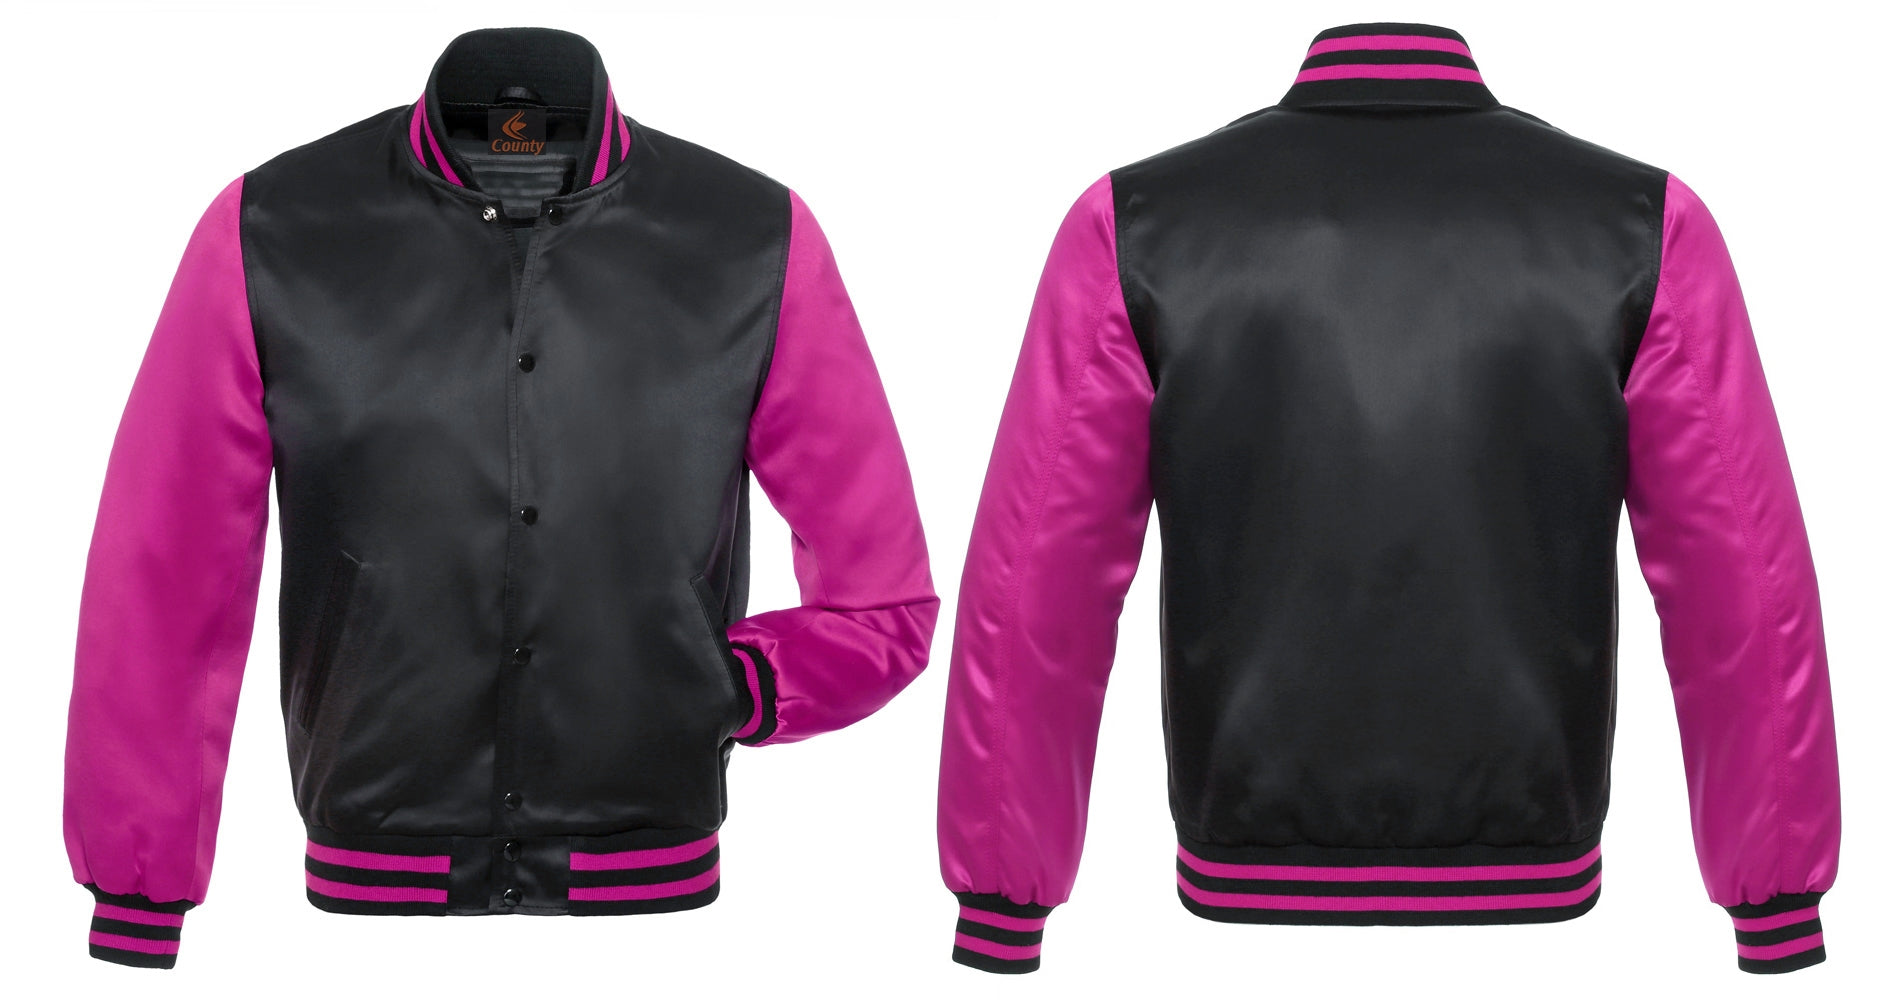 Baseball College Varsity Bomber Super Jacket: Black Hot Pink Satin. Perfect sports wear.